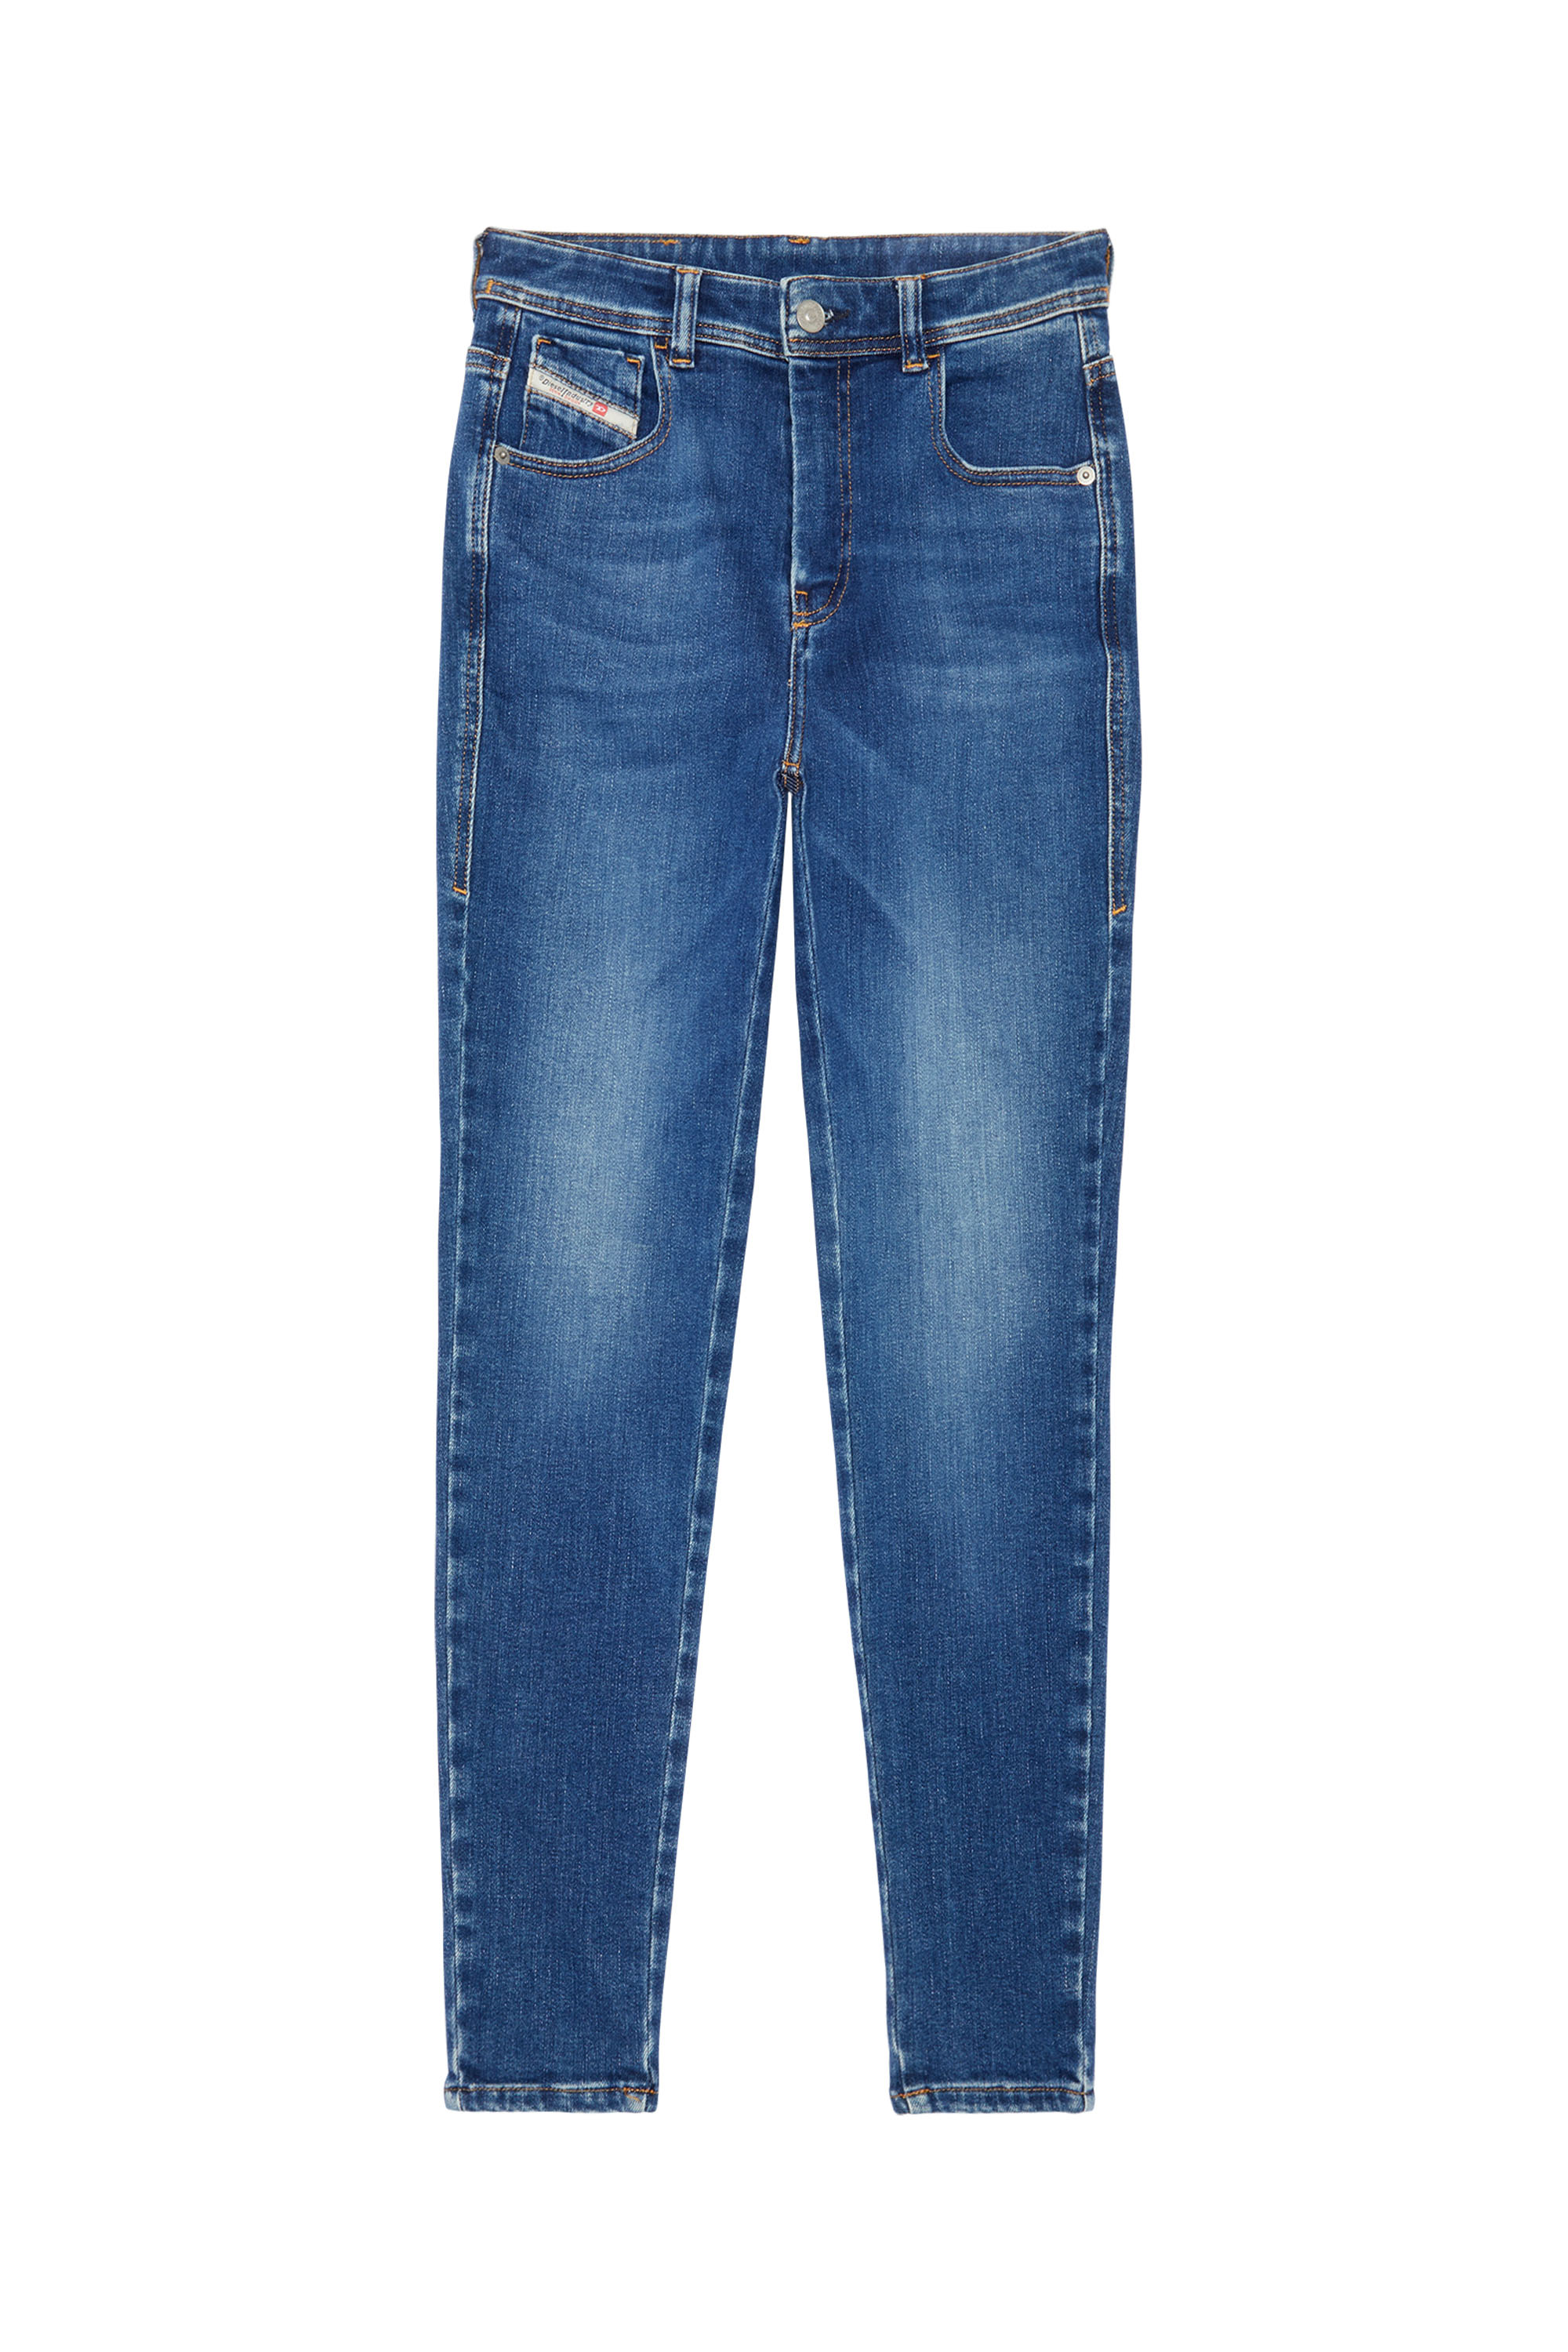 1984 SLANDY-HIGH 09C21 Super skinny Jeans, Bleu moyen - Jeans